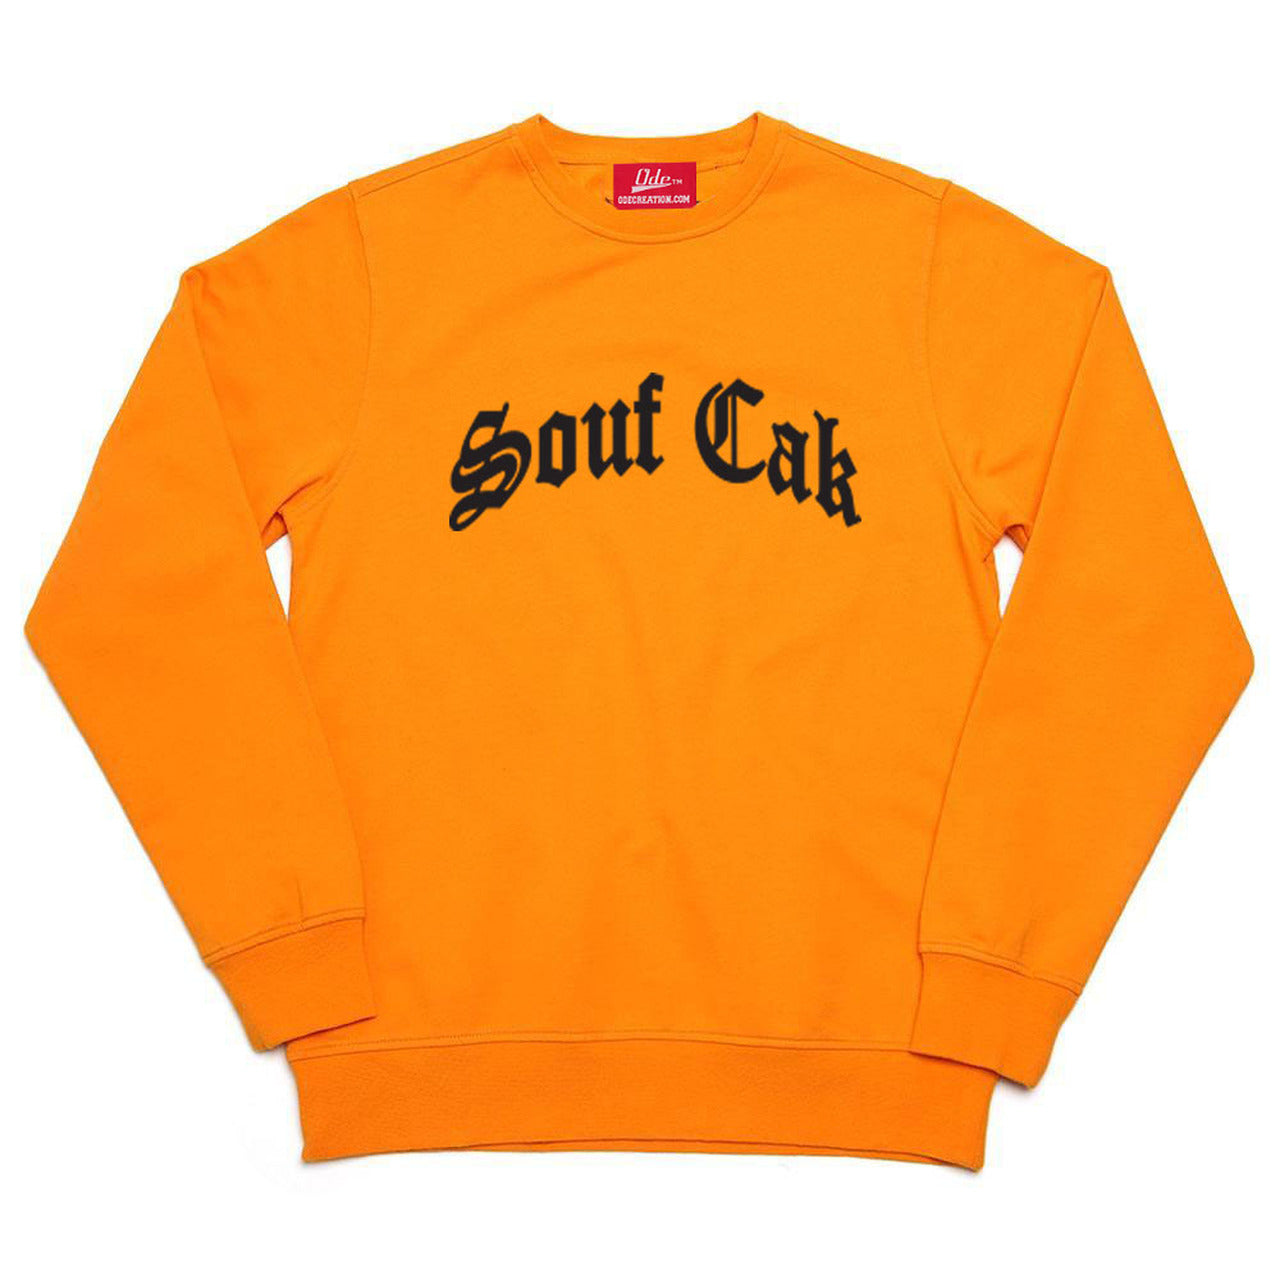 Souf Cak Crewneck Sweatshirt - Orange